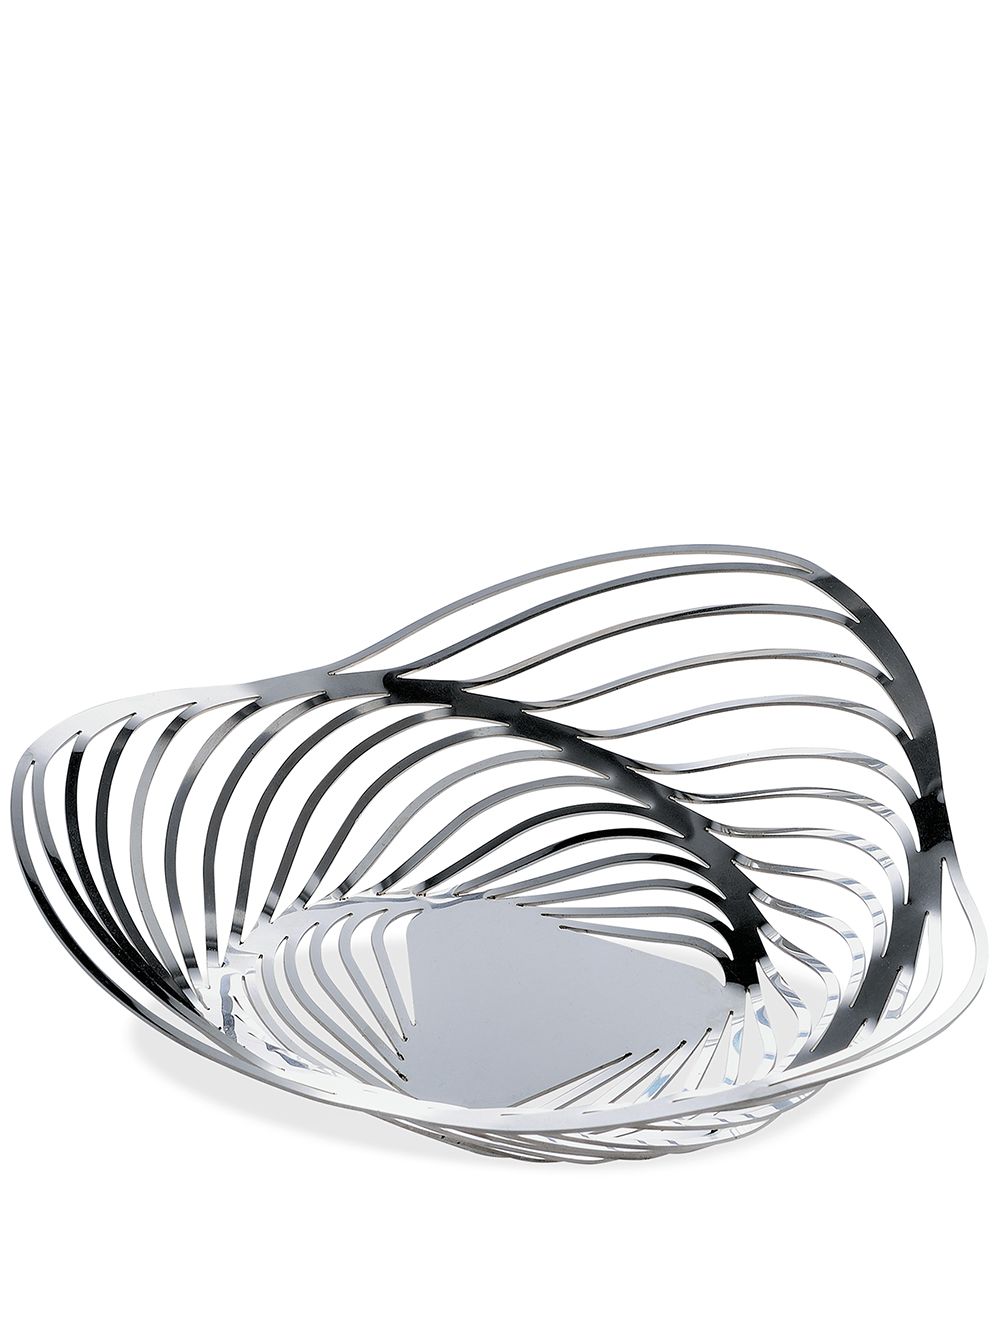 Alessi Trinity stainless steel fruit bowl - Silver von Alessi